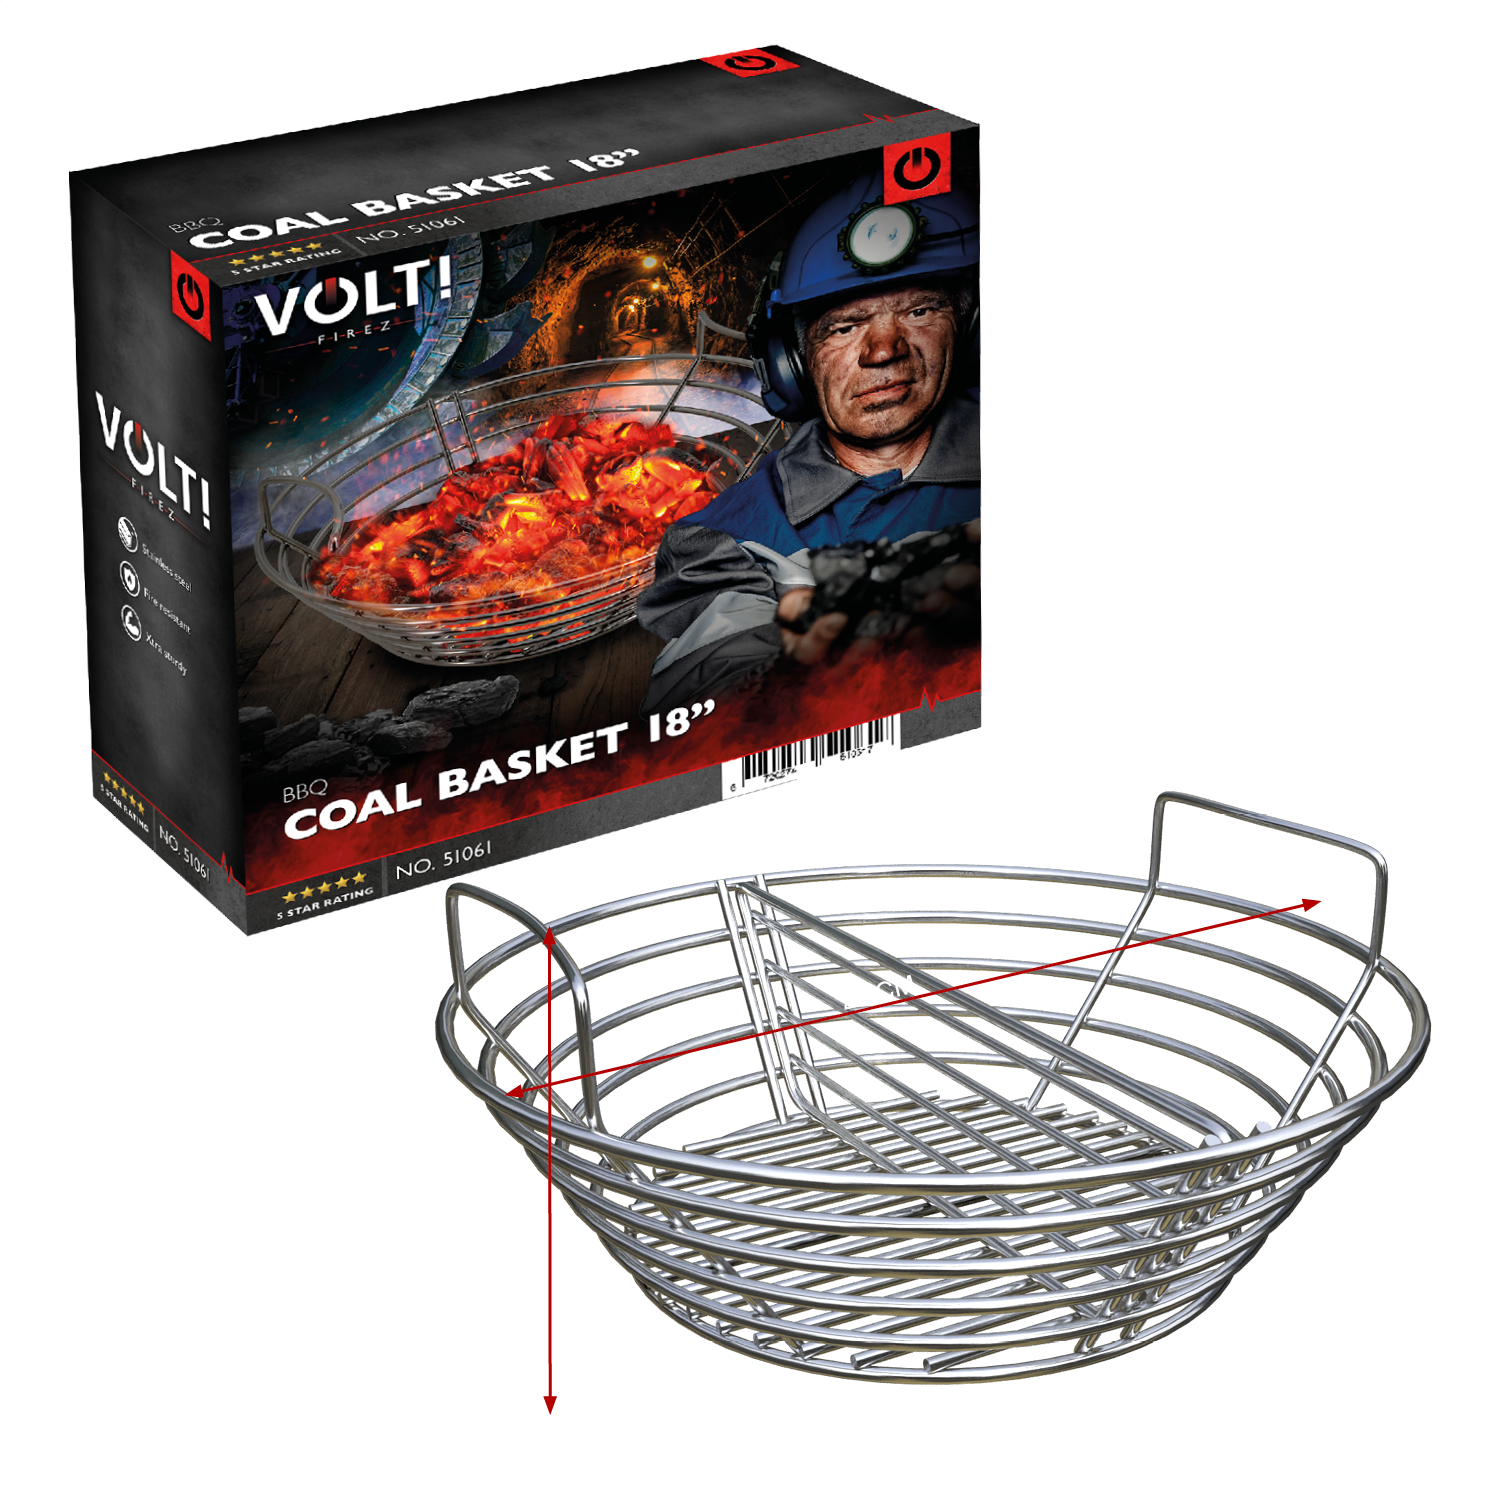 51061 Coal Basket 18 3